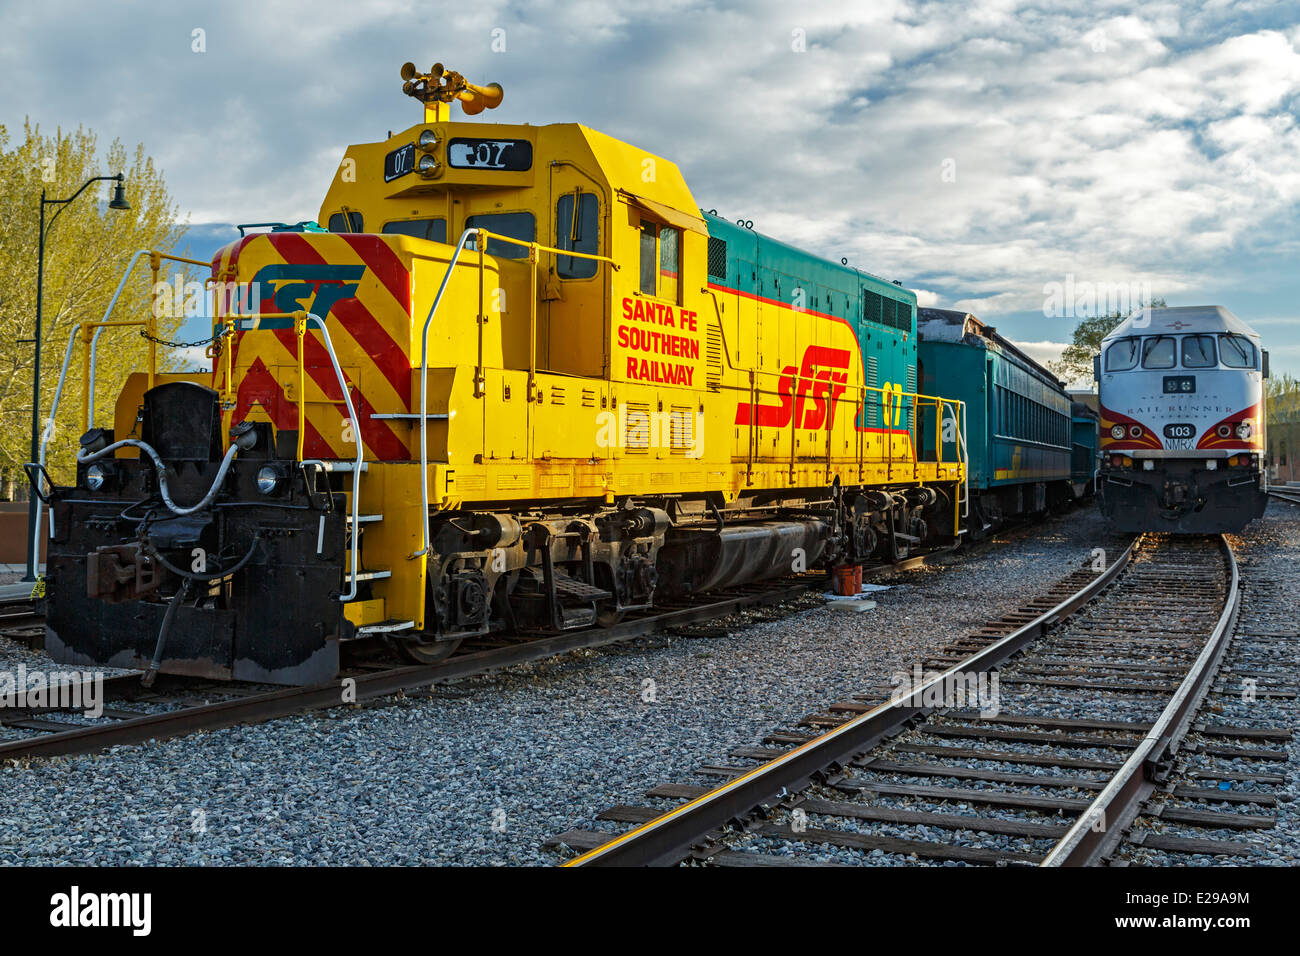 Santa Fe Southern Railway Motor und Railrunner Express-s-Bahn, Railyard Santa Fe, Santa Fe, New Mexico, Vereinigte Staaten Stockfoto